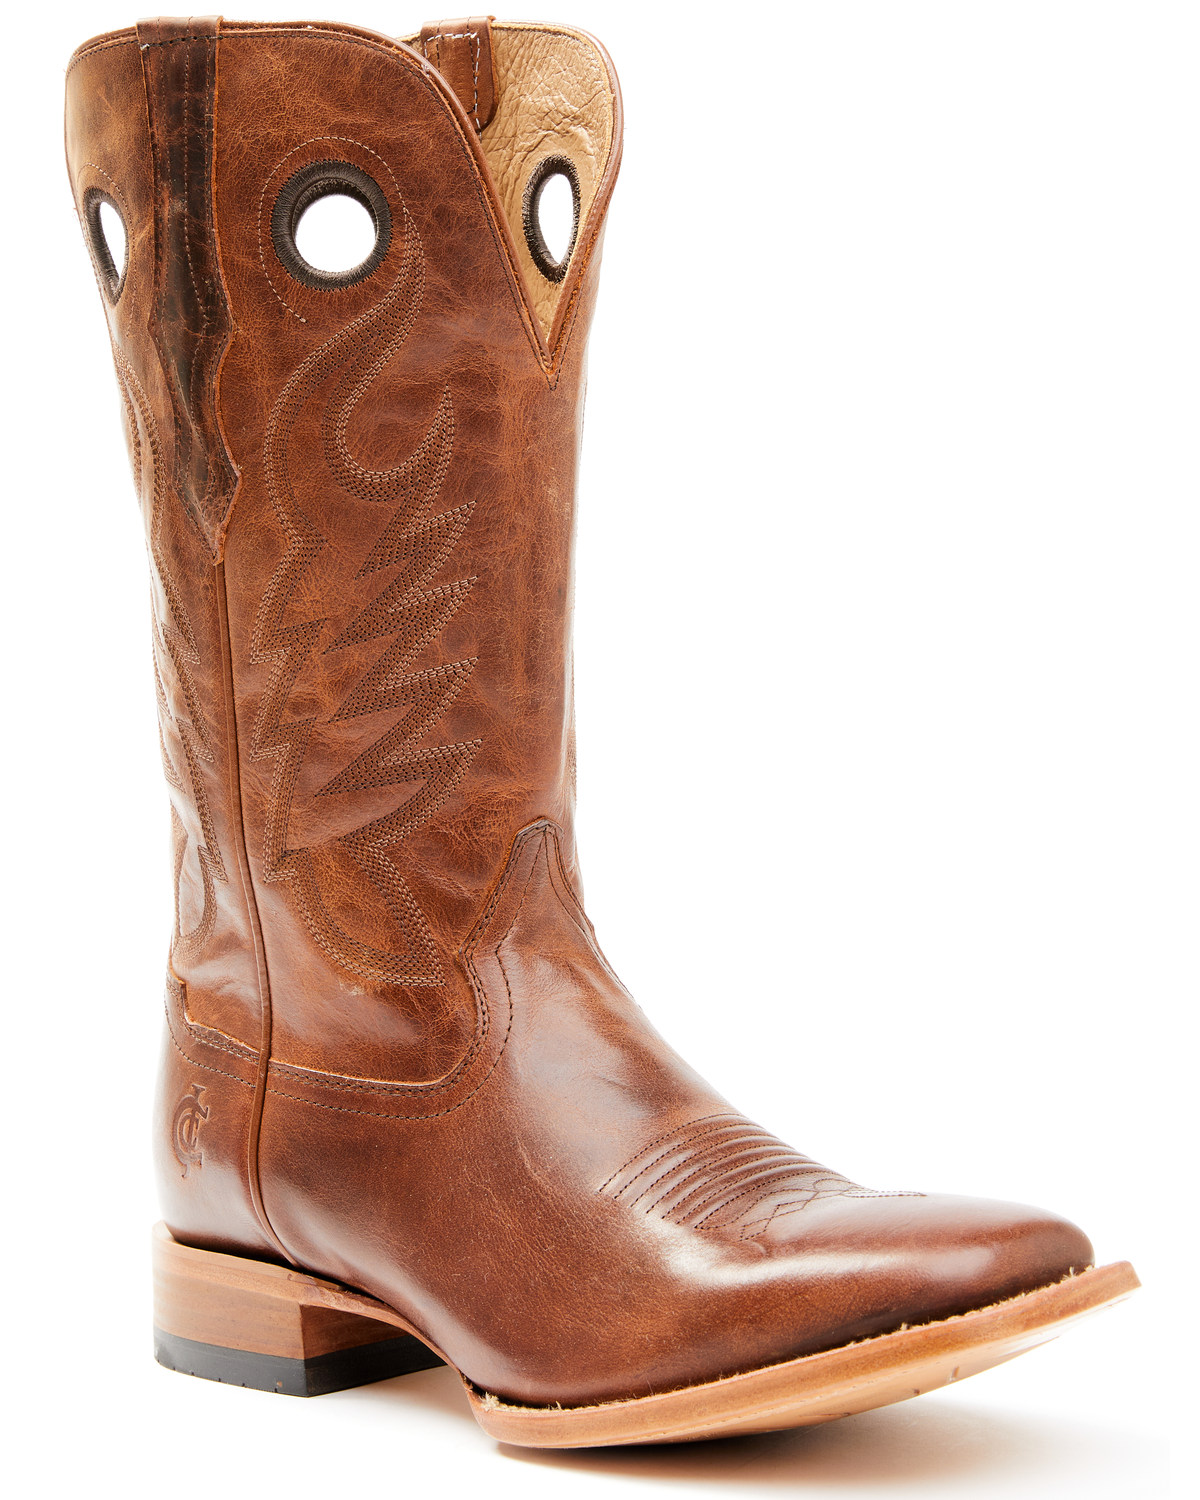 Cody James Men's Vintage Rust Union Xero Gravity Leather Western Boot - Broad Square Toe